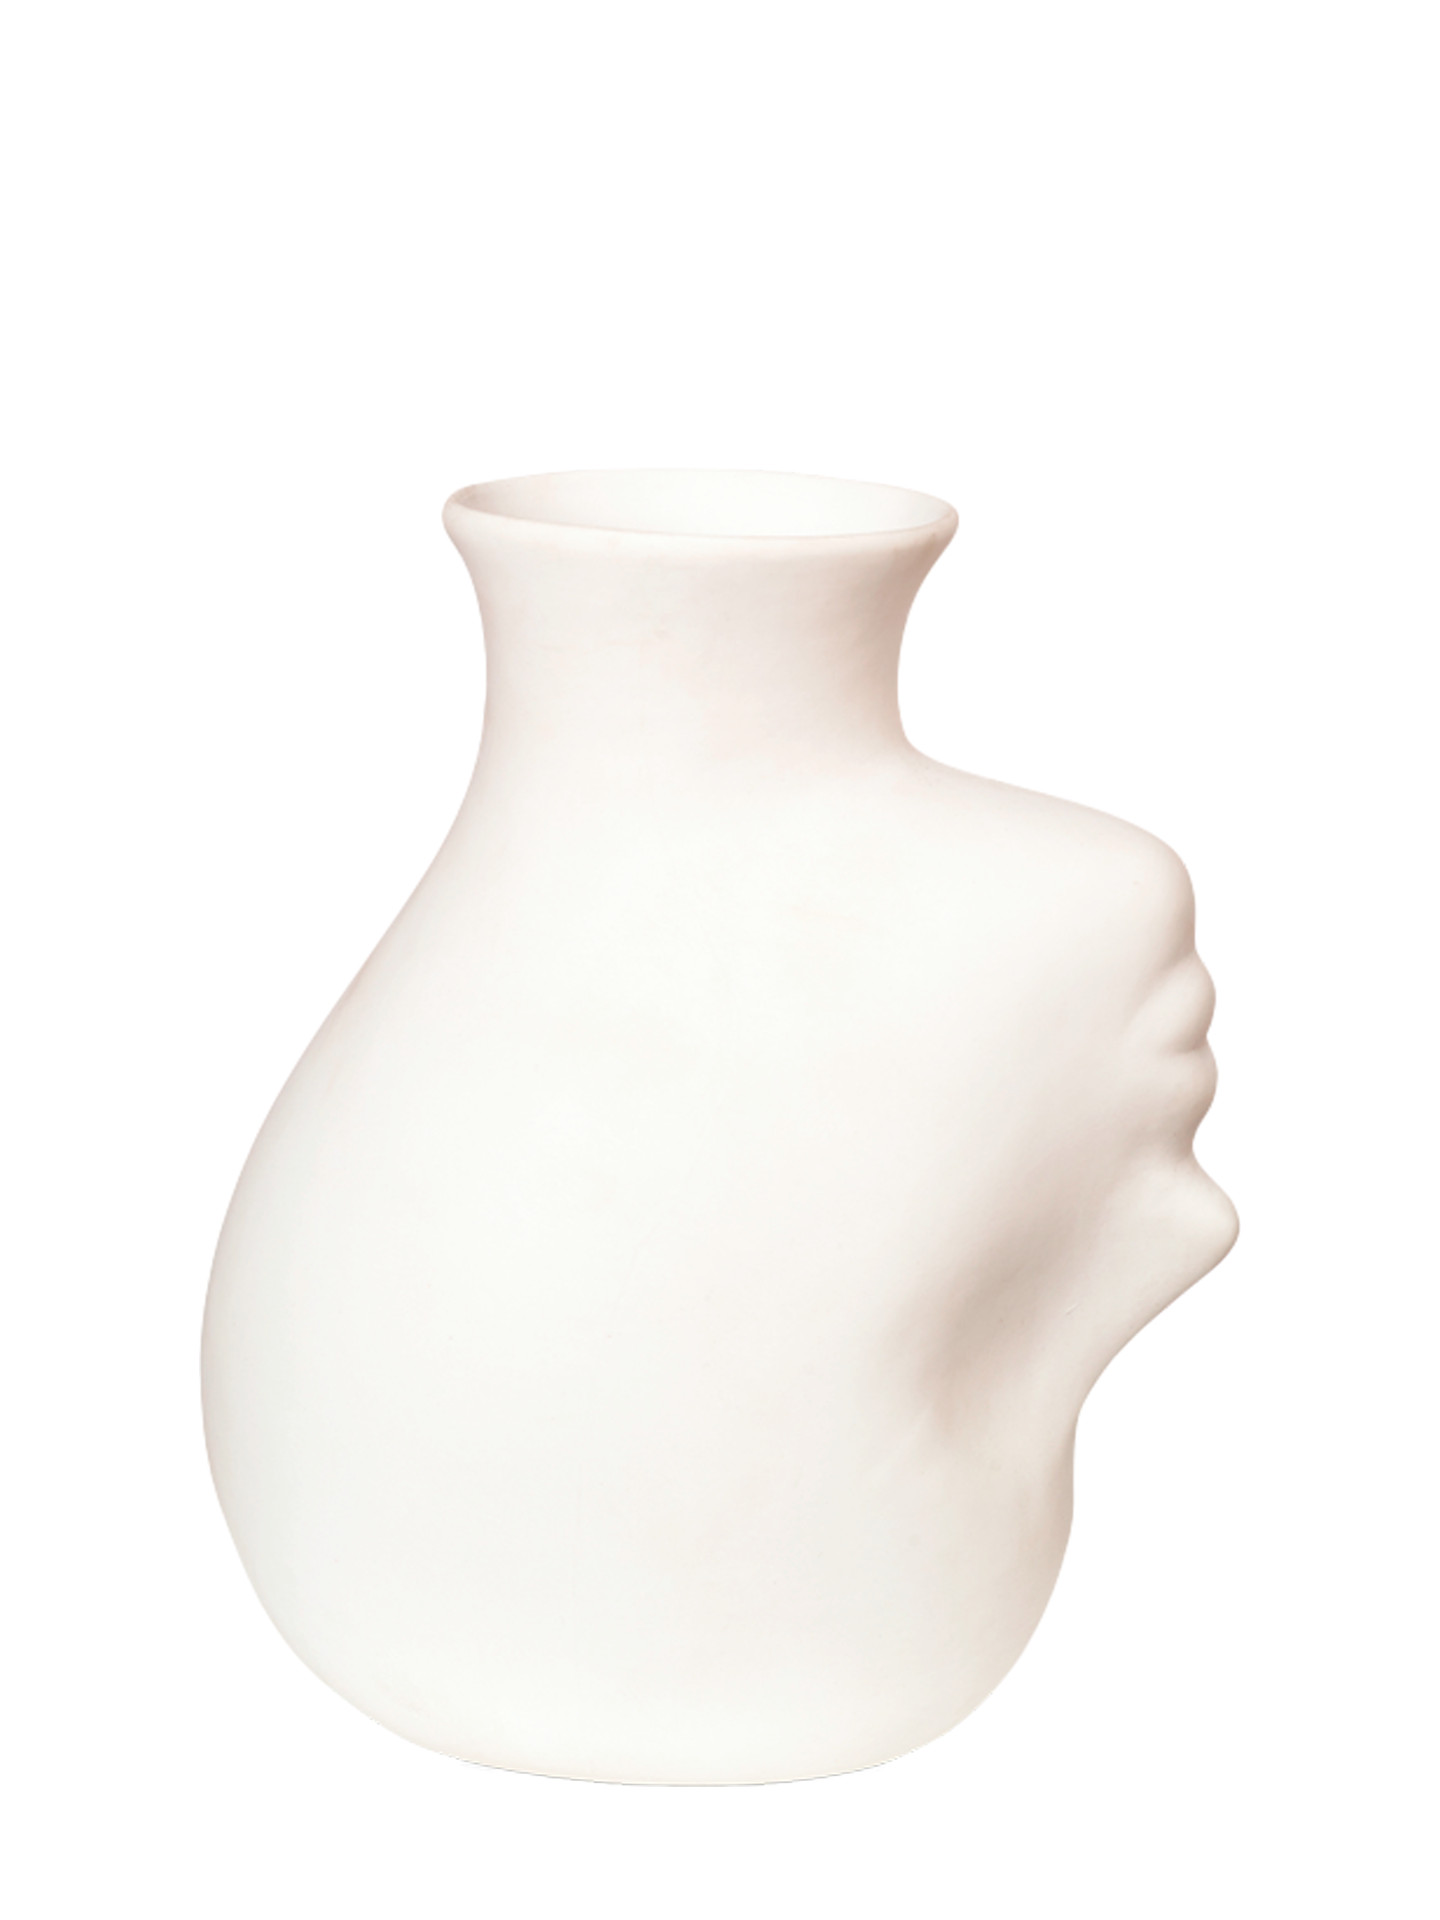 Vase head upside down, white